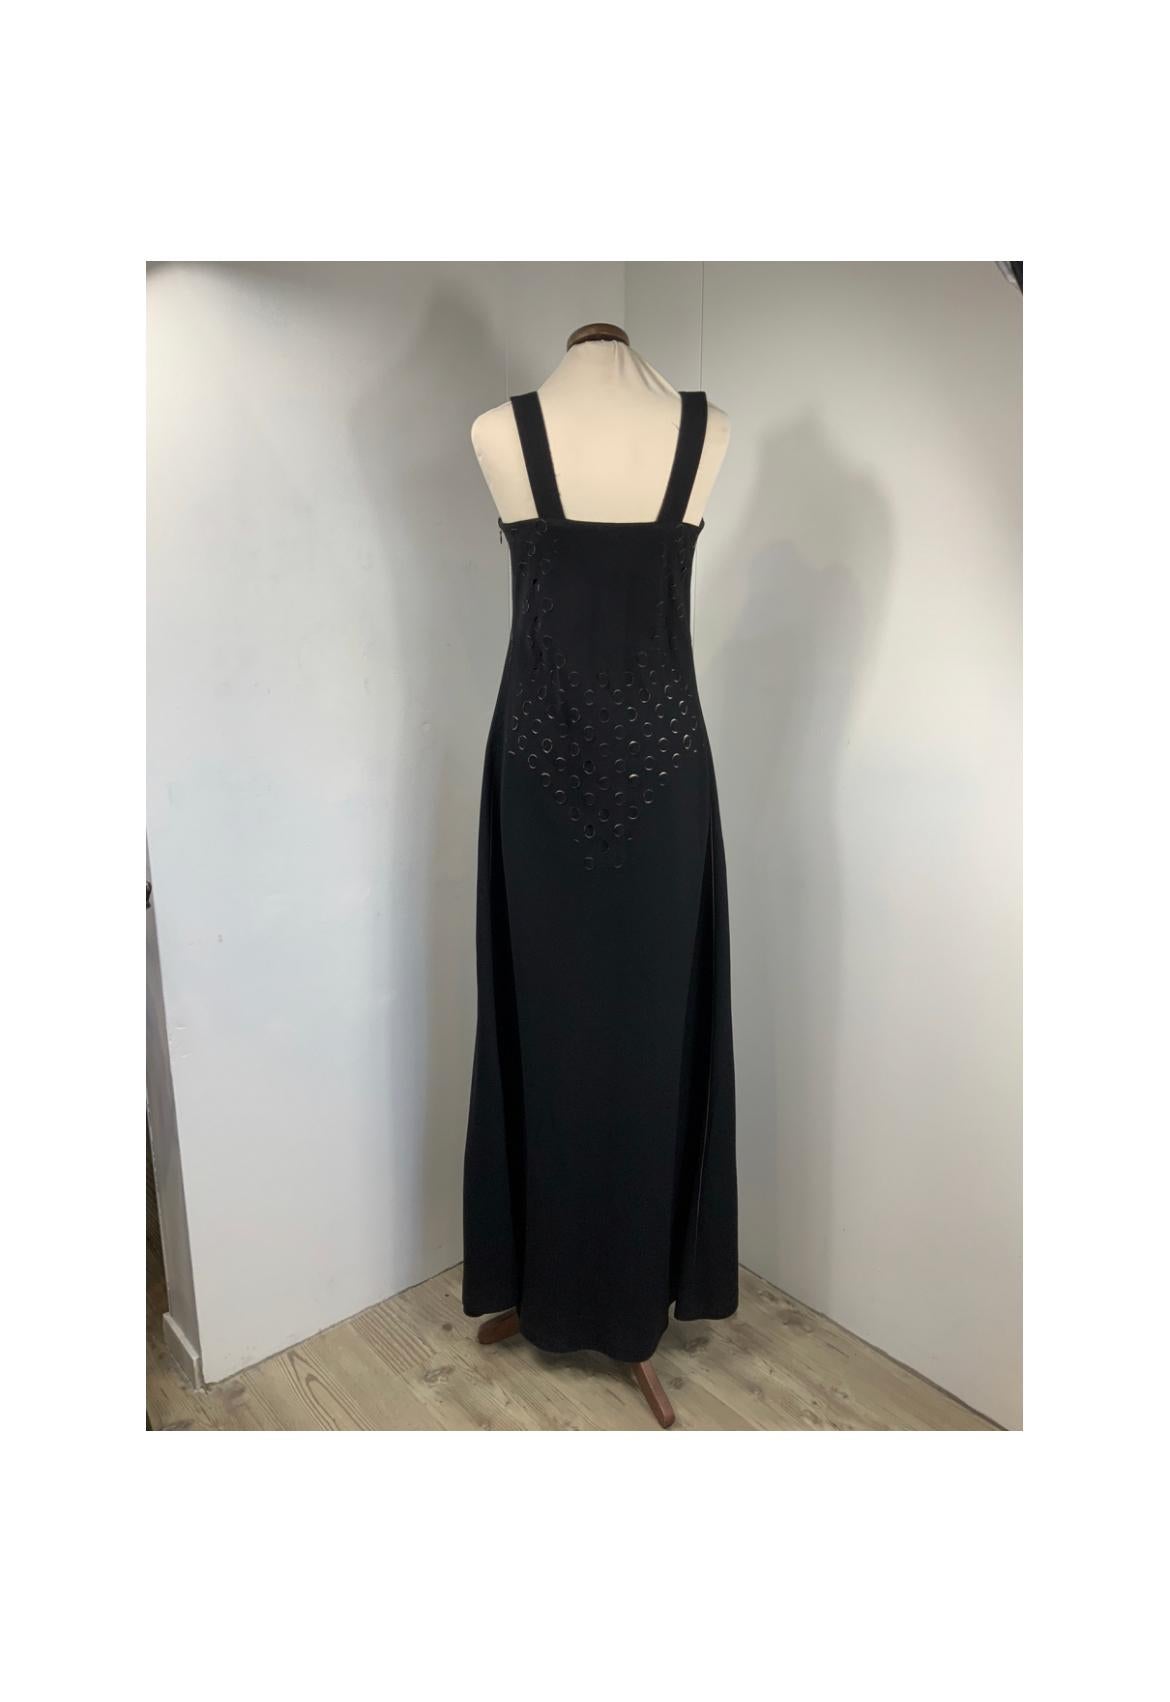 Maison Martin Margiela black dress. For Sale 3